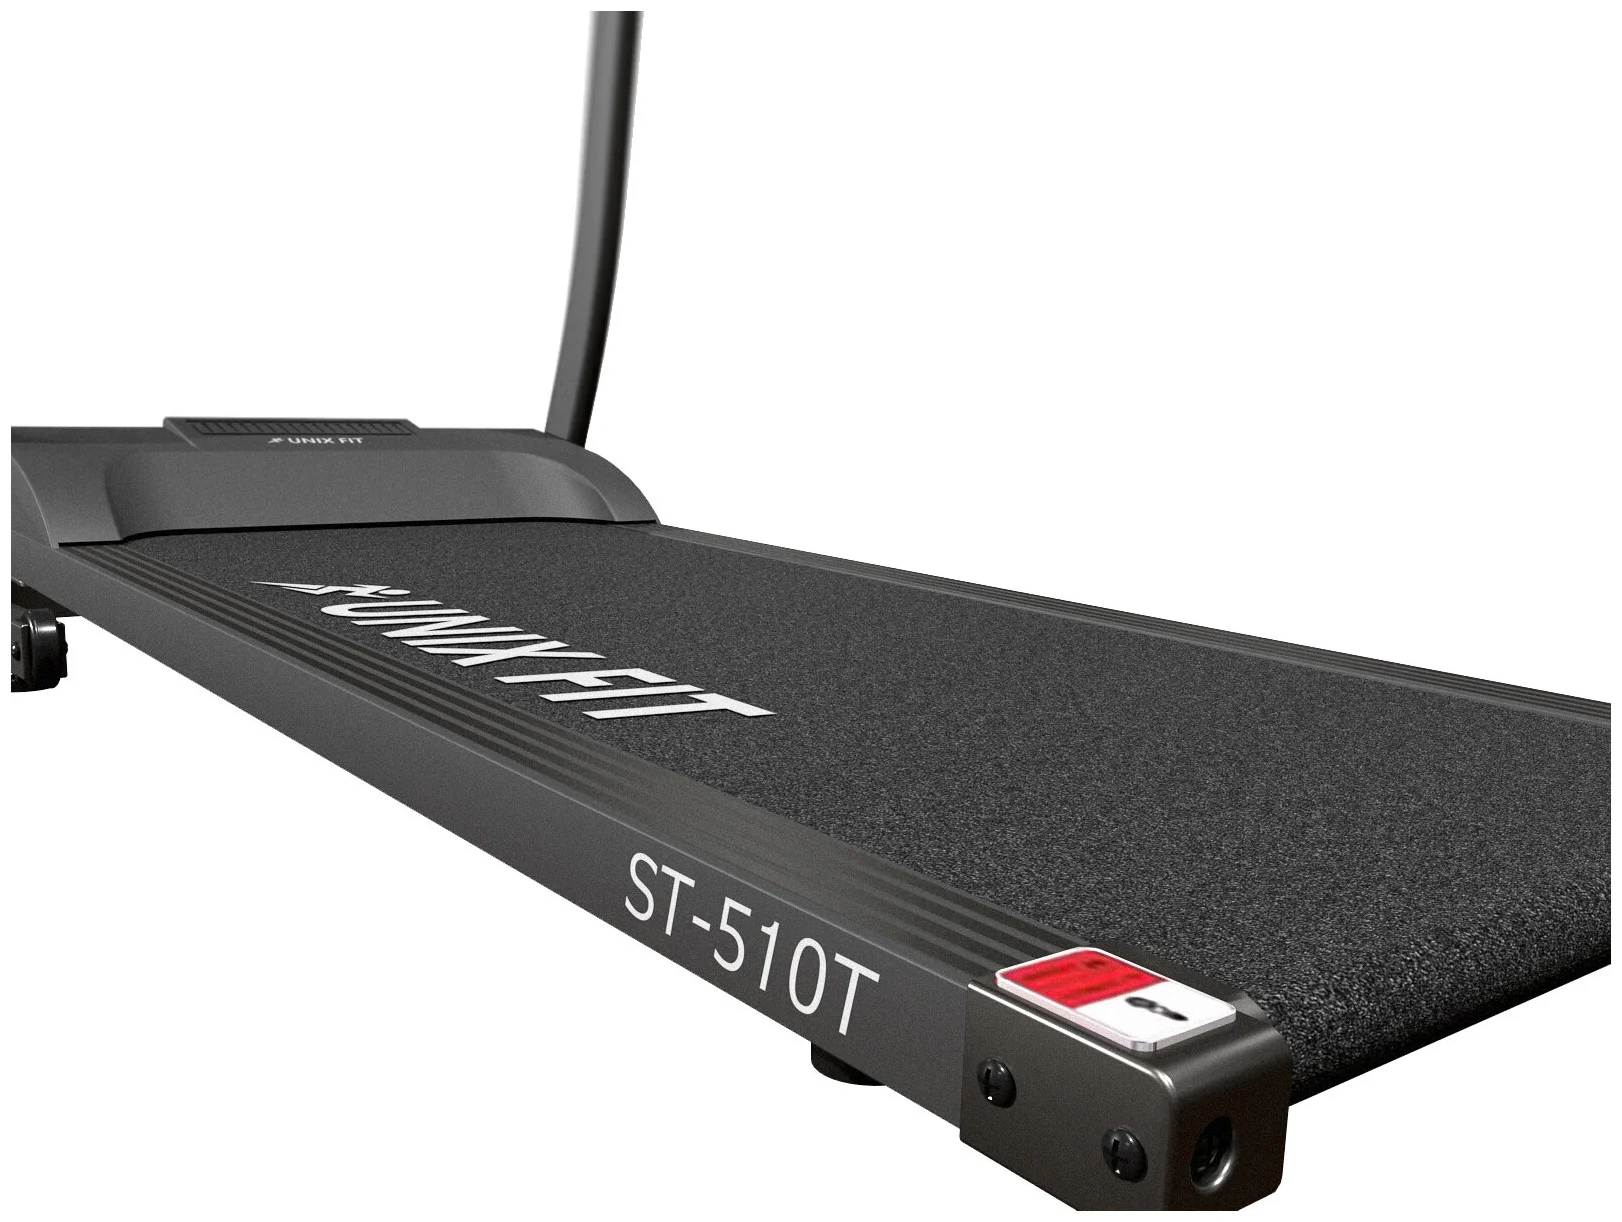 UnixFit ST-510T (2018) - вес пользователя до 110 кг